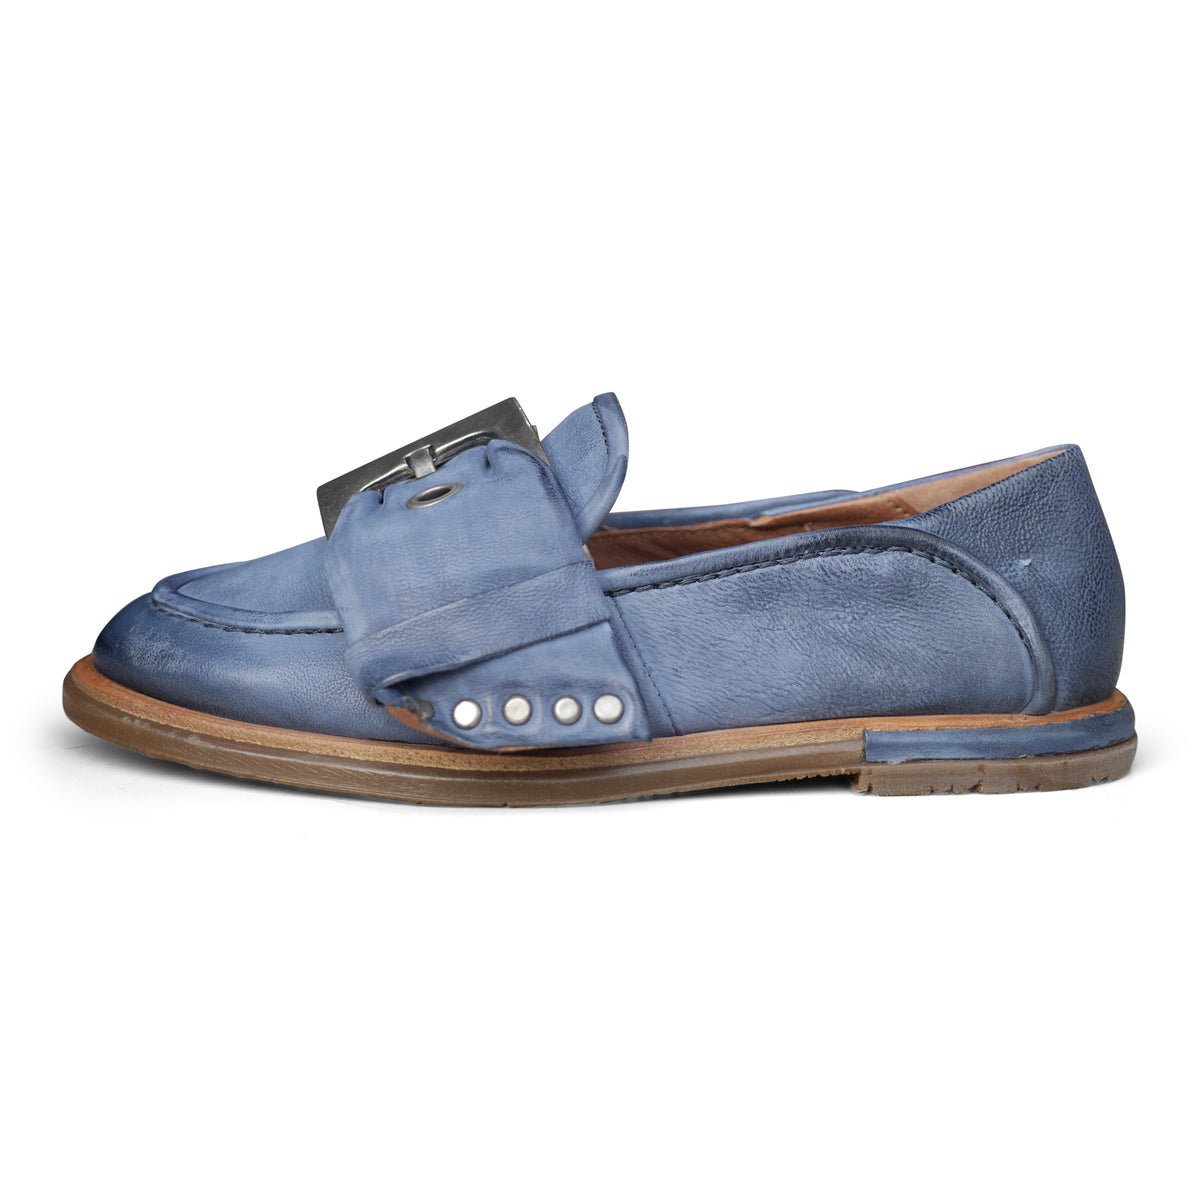 A74105 - Blue Buckled Loafer